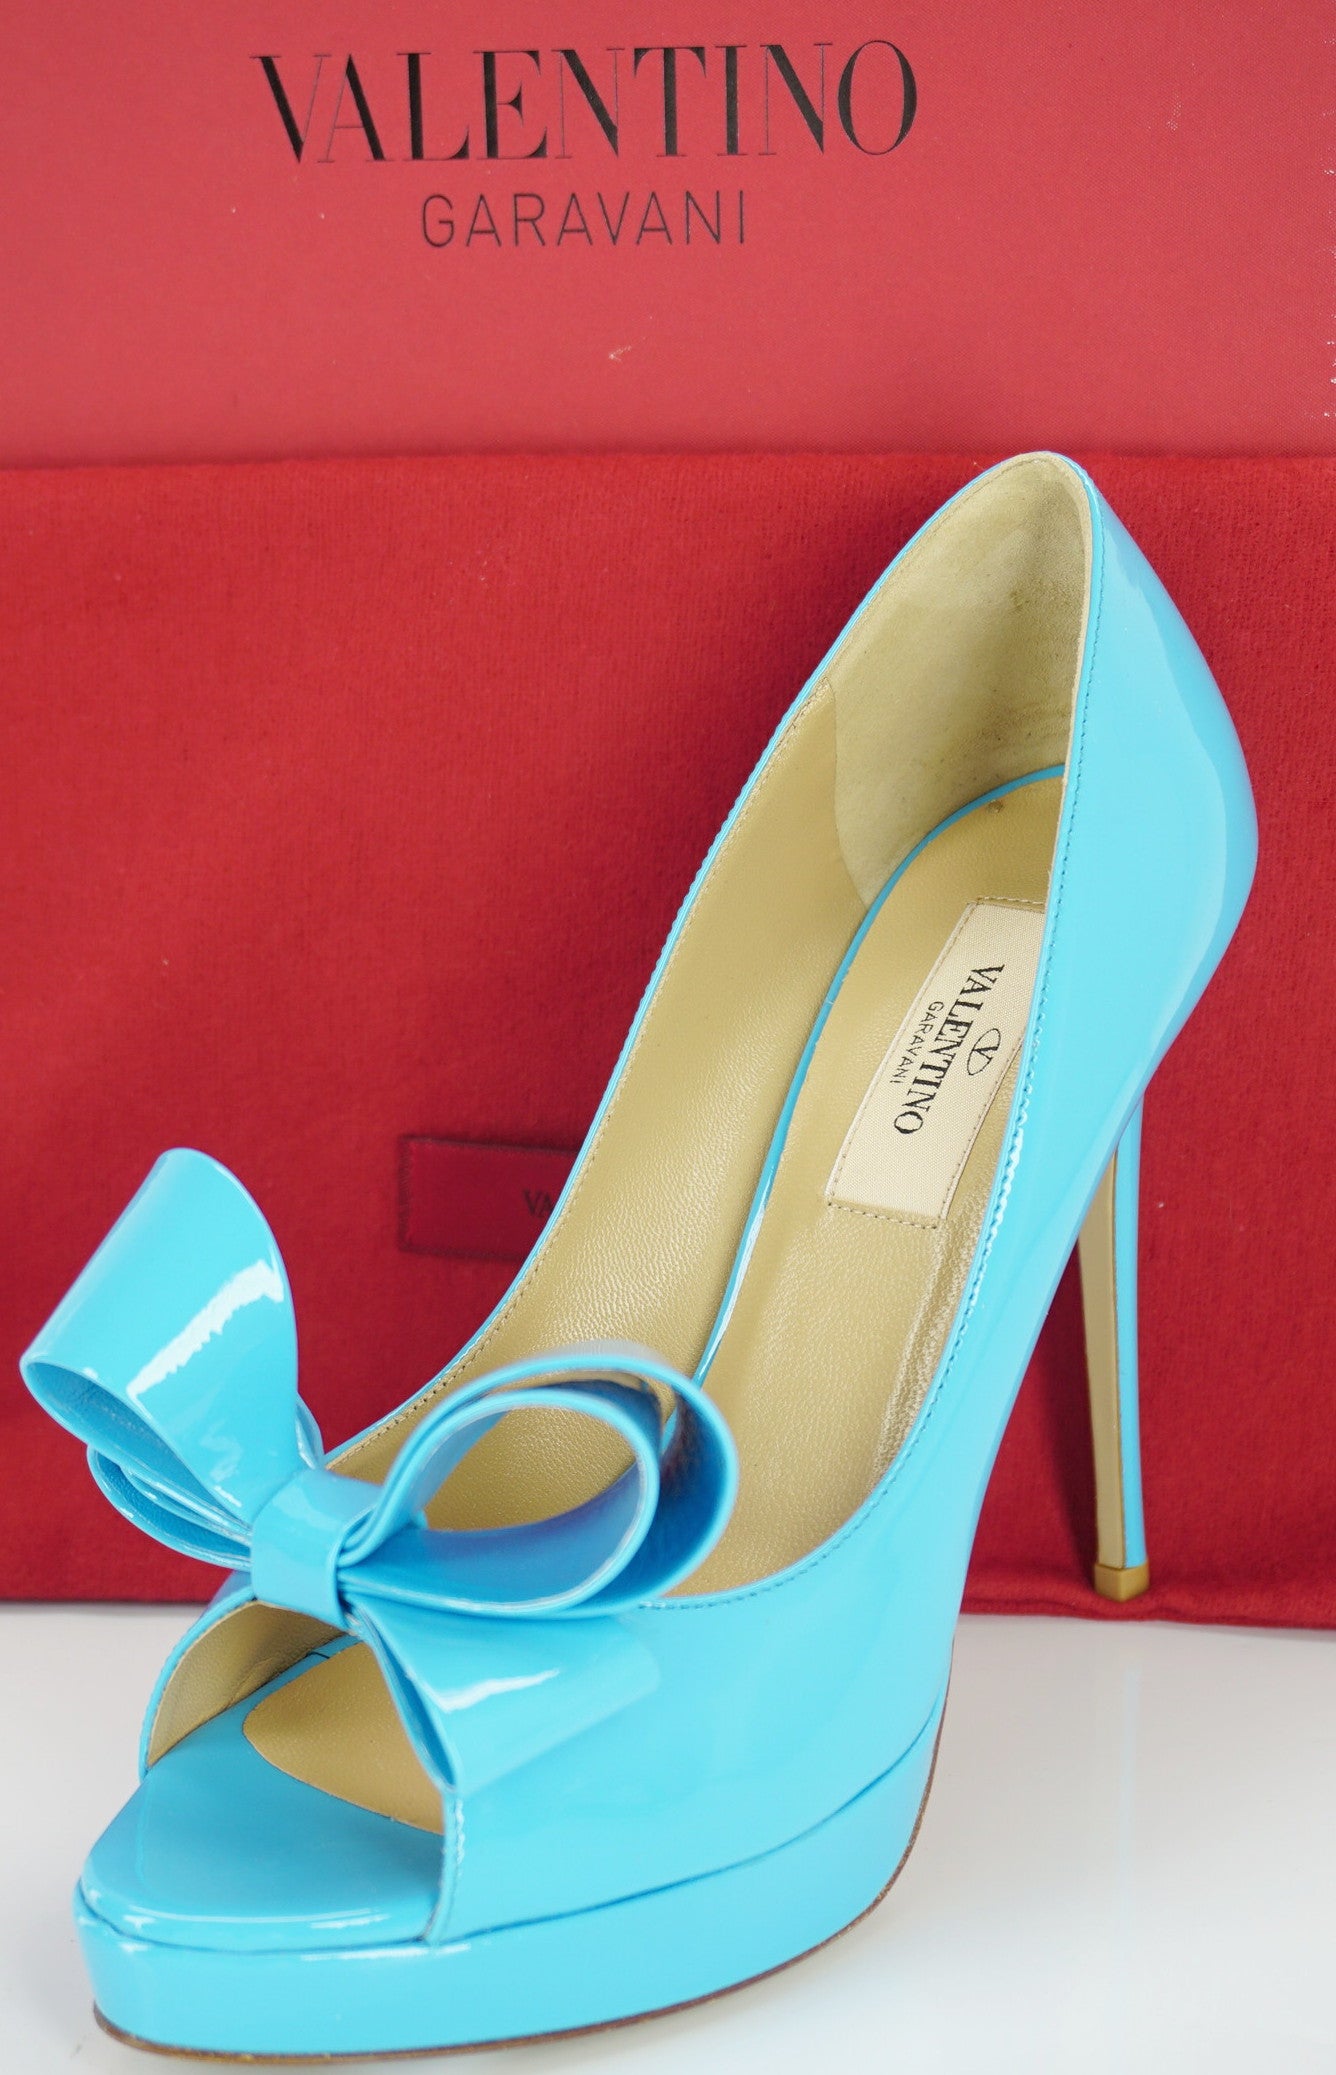 Valentino Blue Patent Bow Ope Toe Platform Pumps SZ 37 high heels $895 NIB